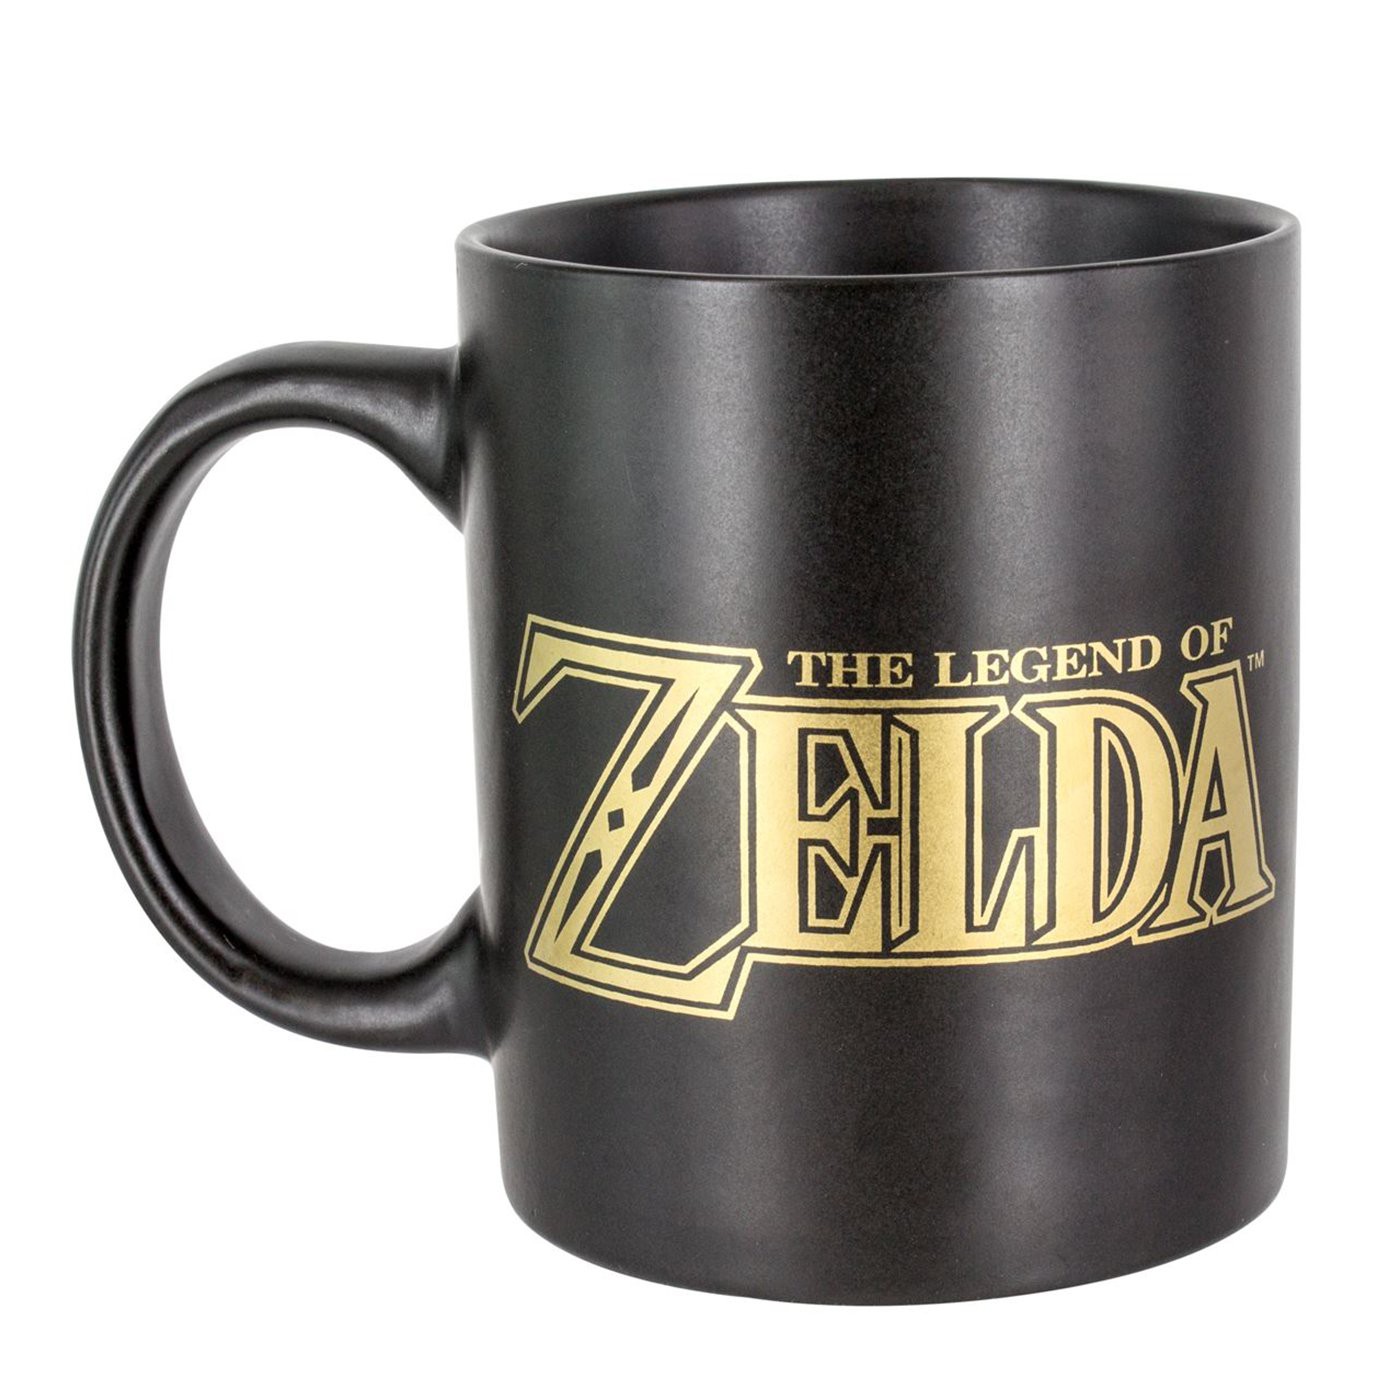 Zelda Hyrule Ten Ounce Mug